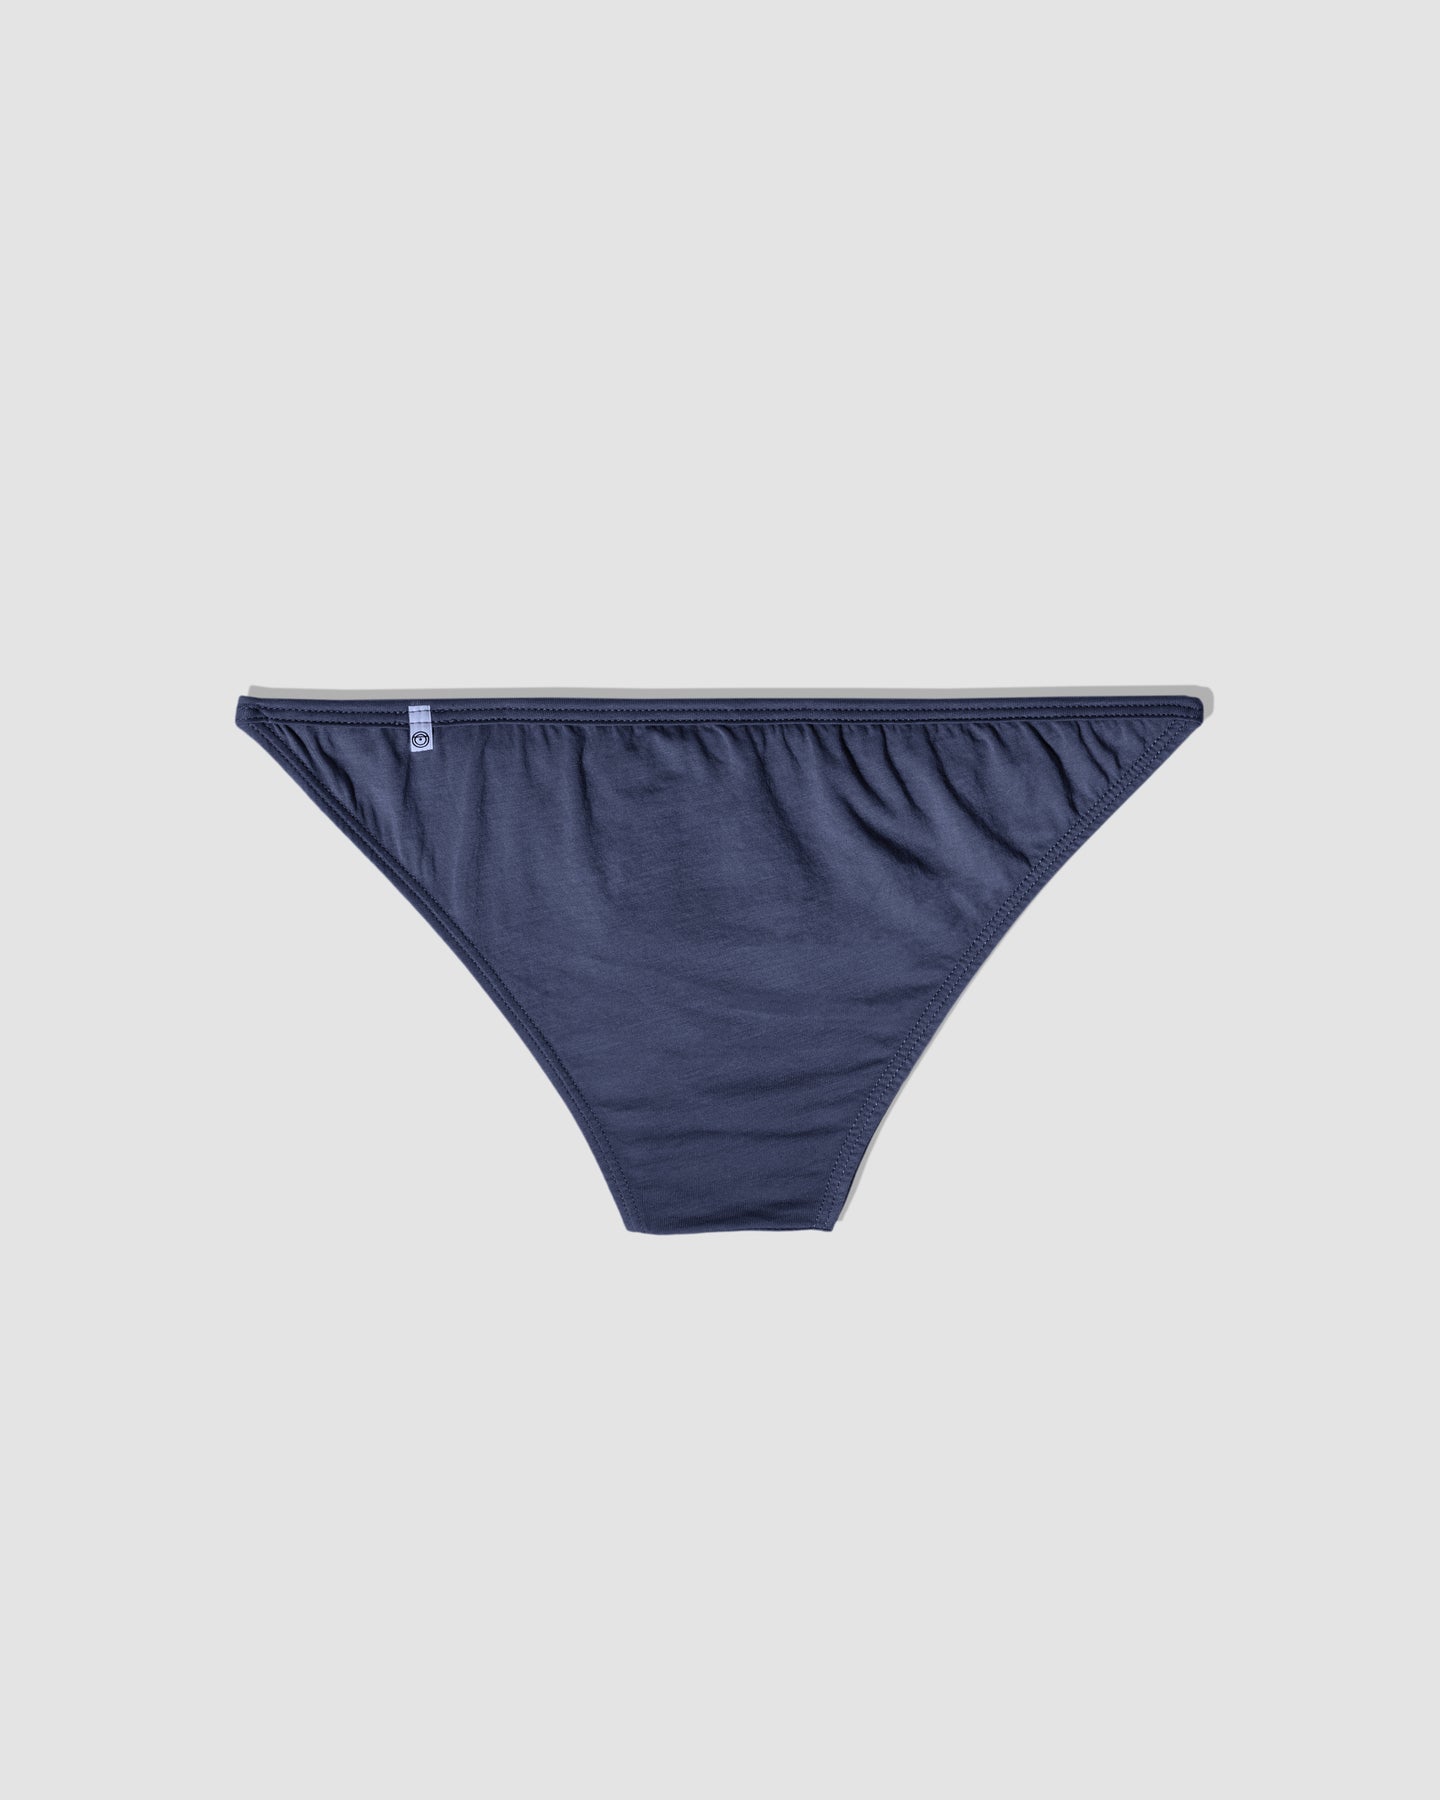 Teal Satin String Bikini panties, classic style for women and men!